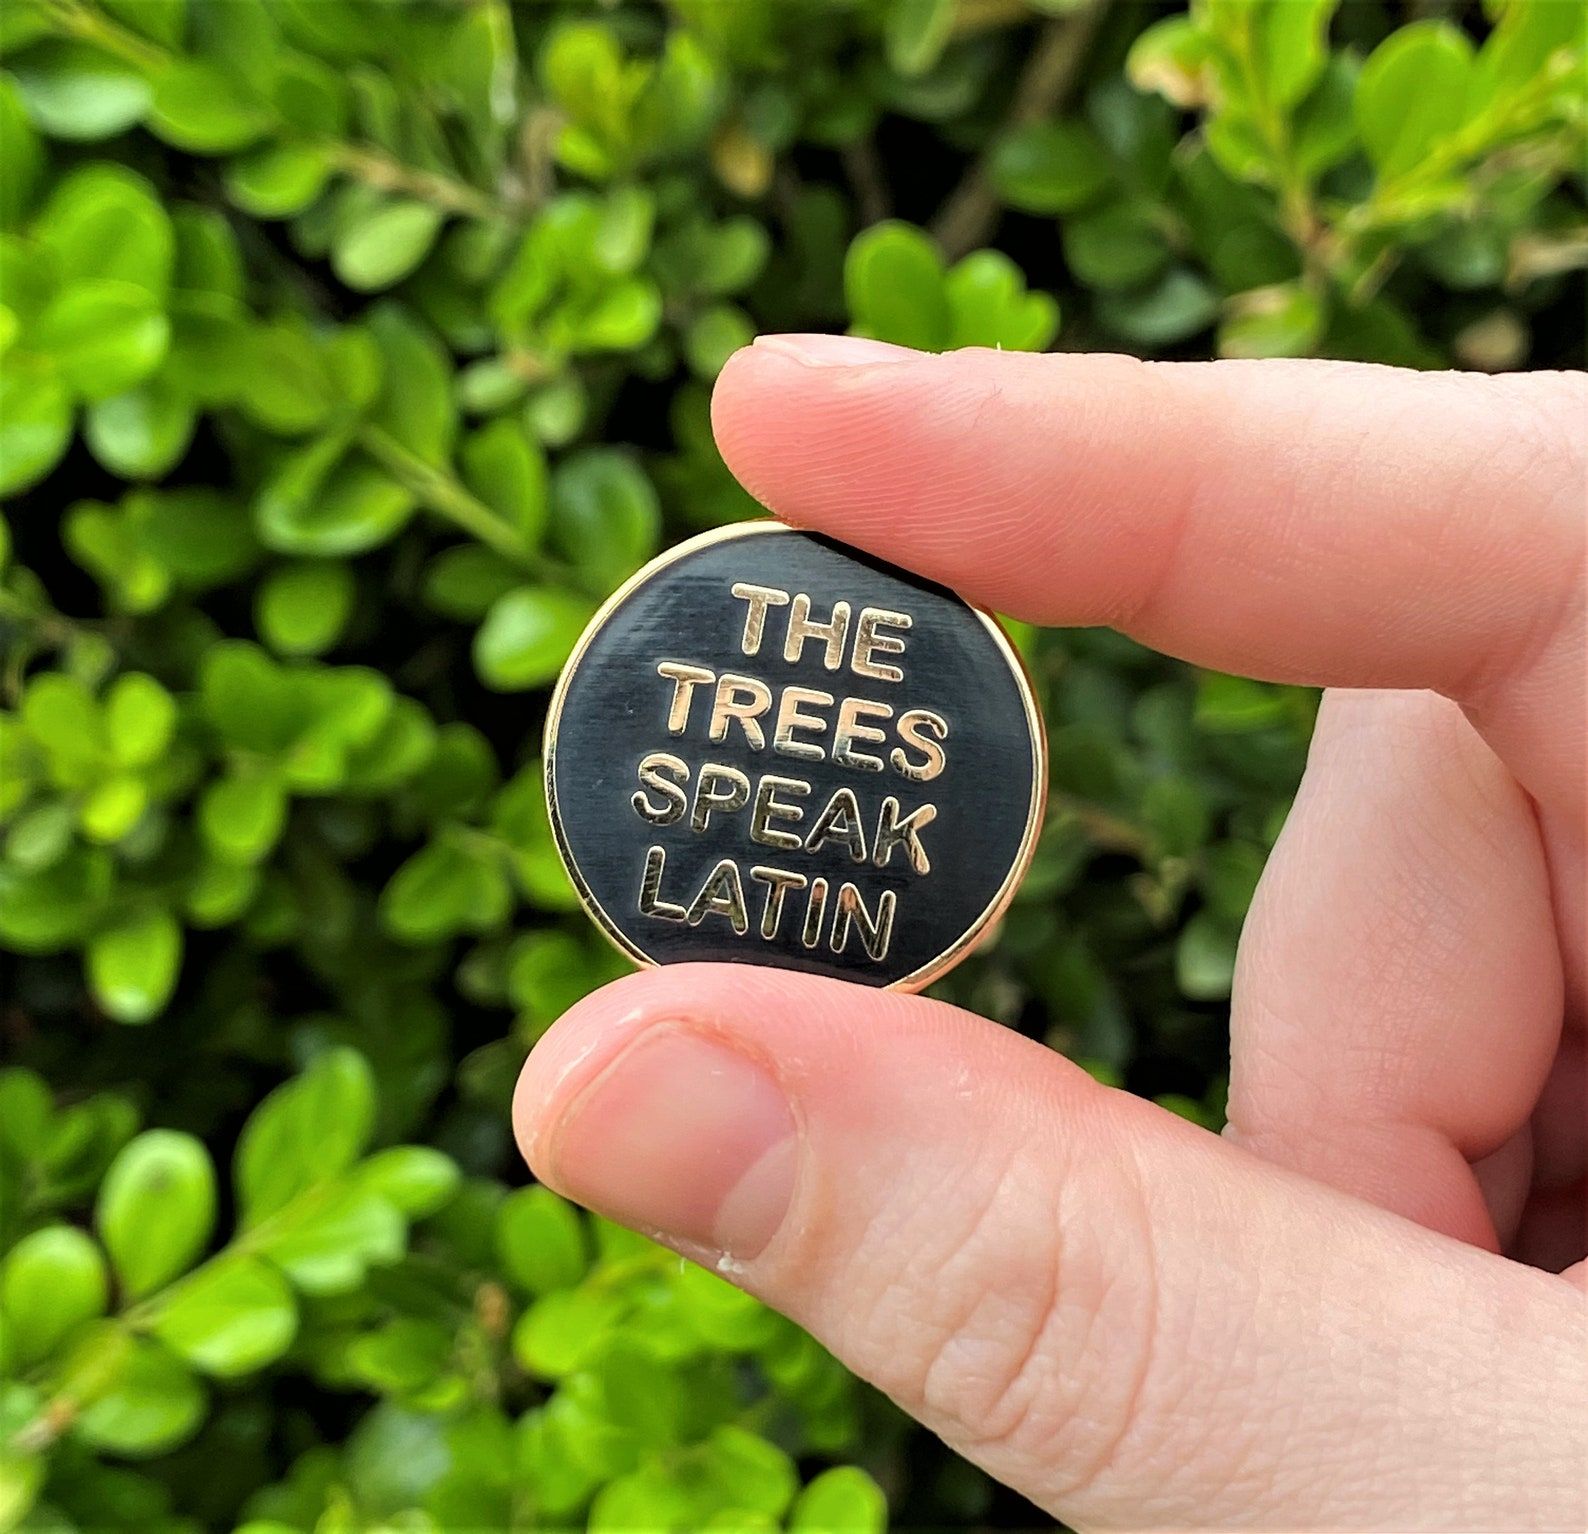 A small round enamel pin that reads "The trees speak Latin"